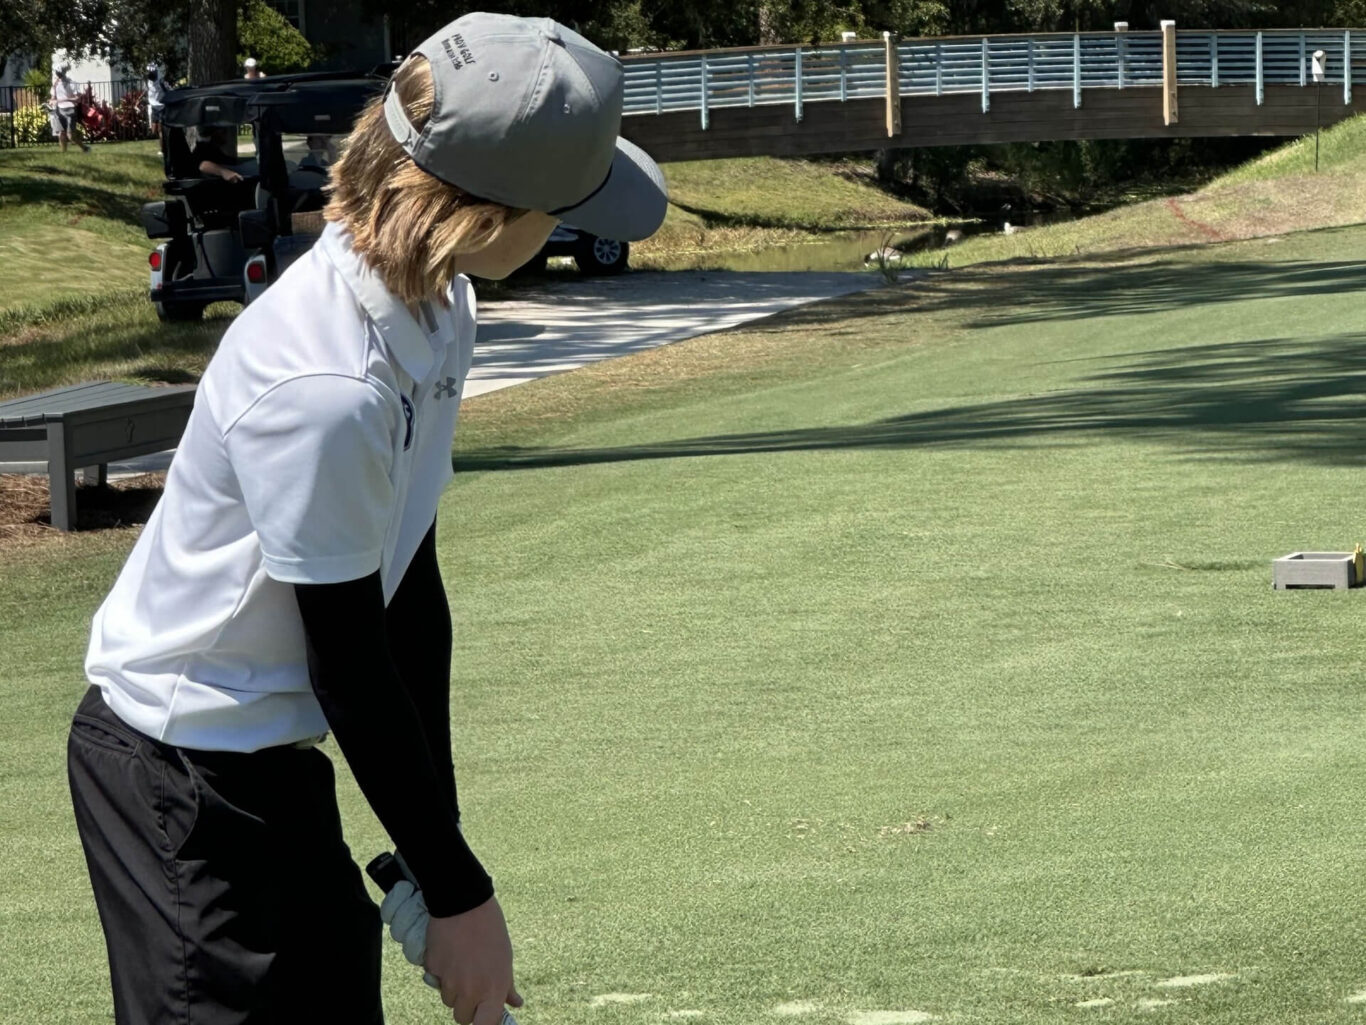 A Golf Boy is hitting a golf ball on a golf course.